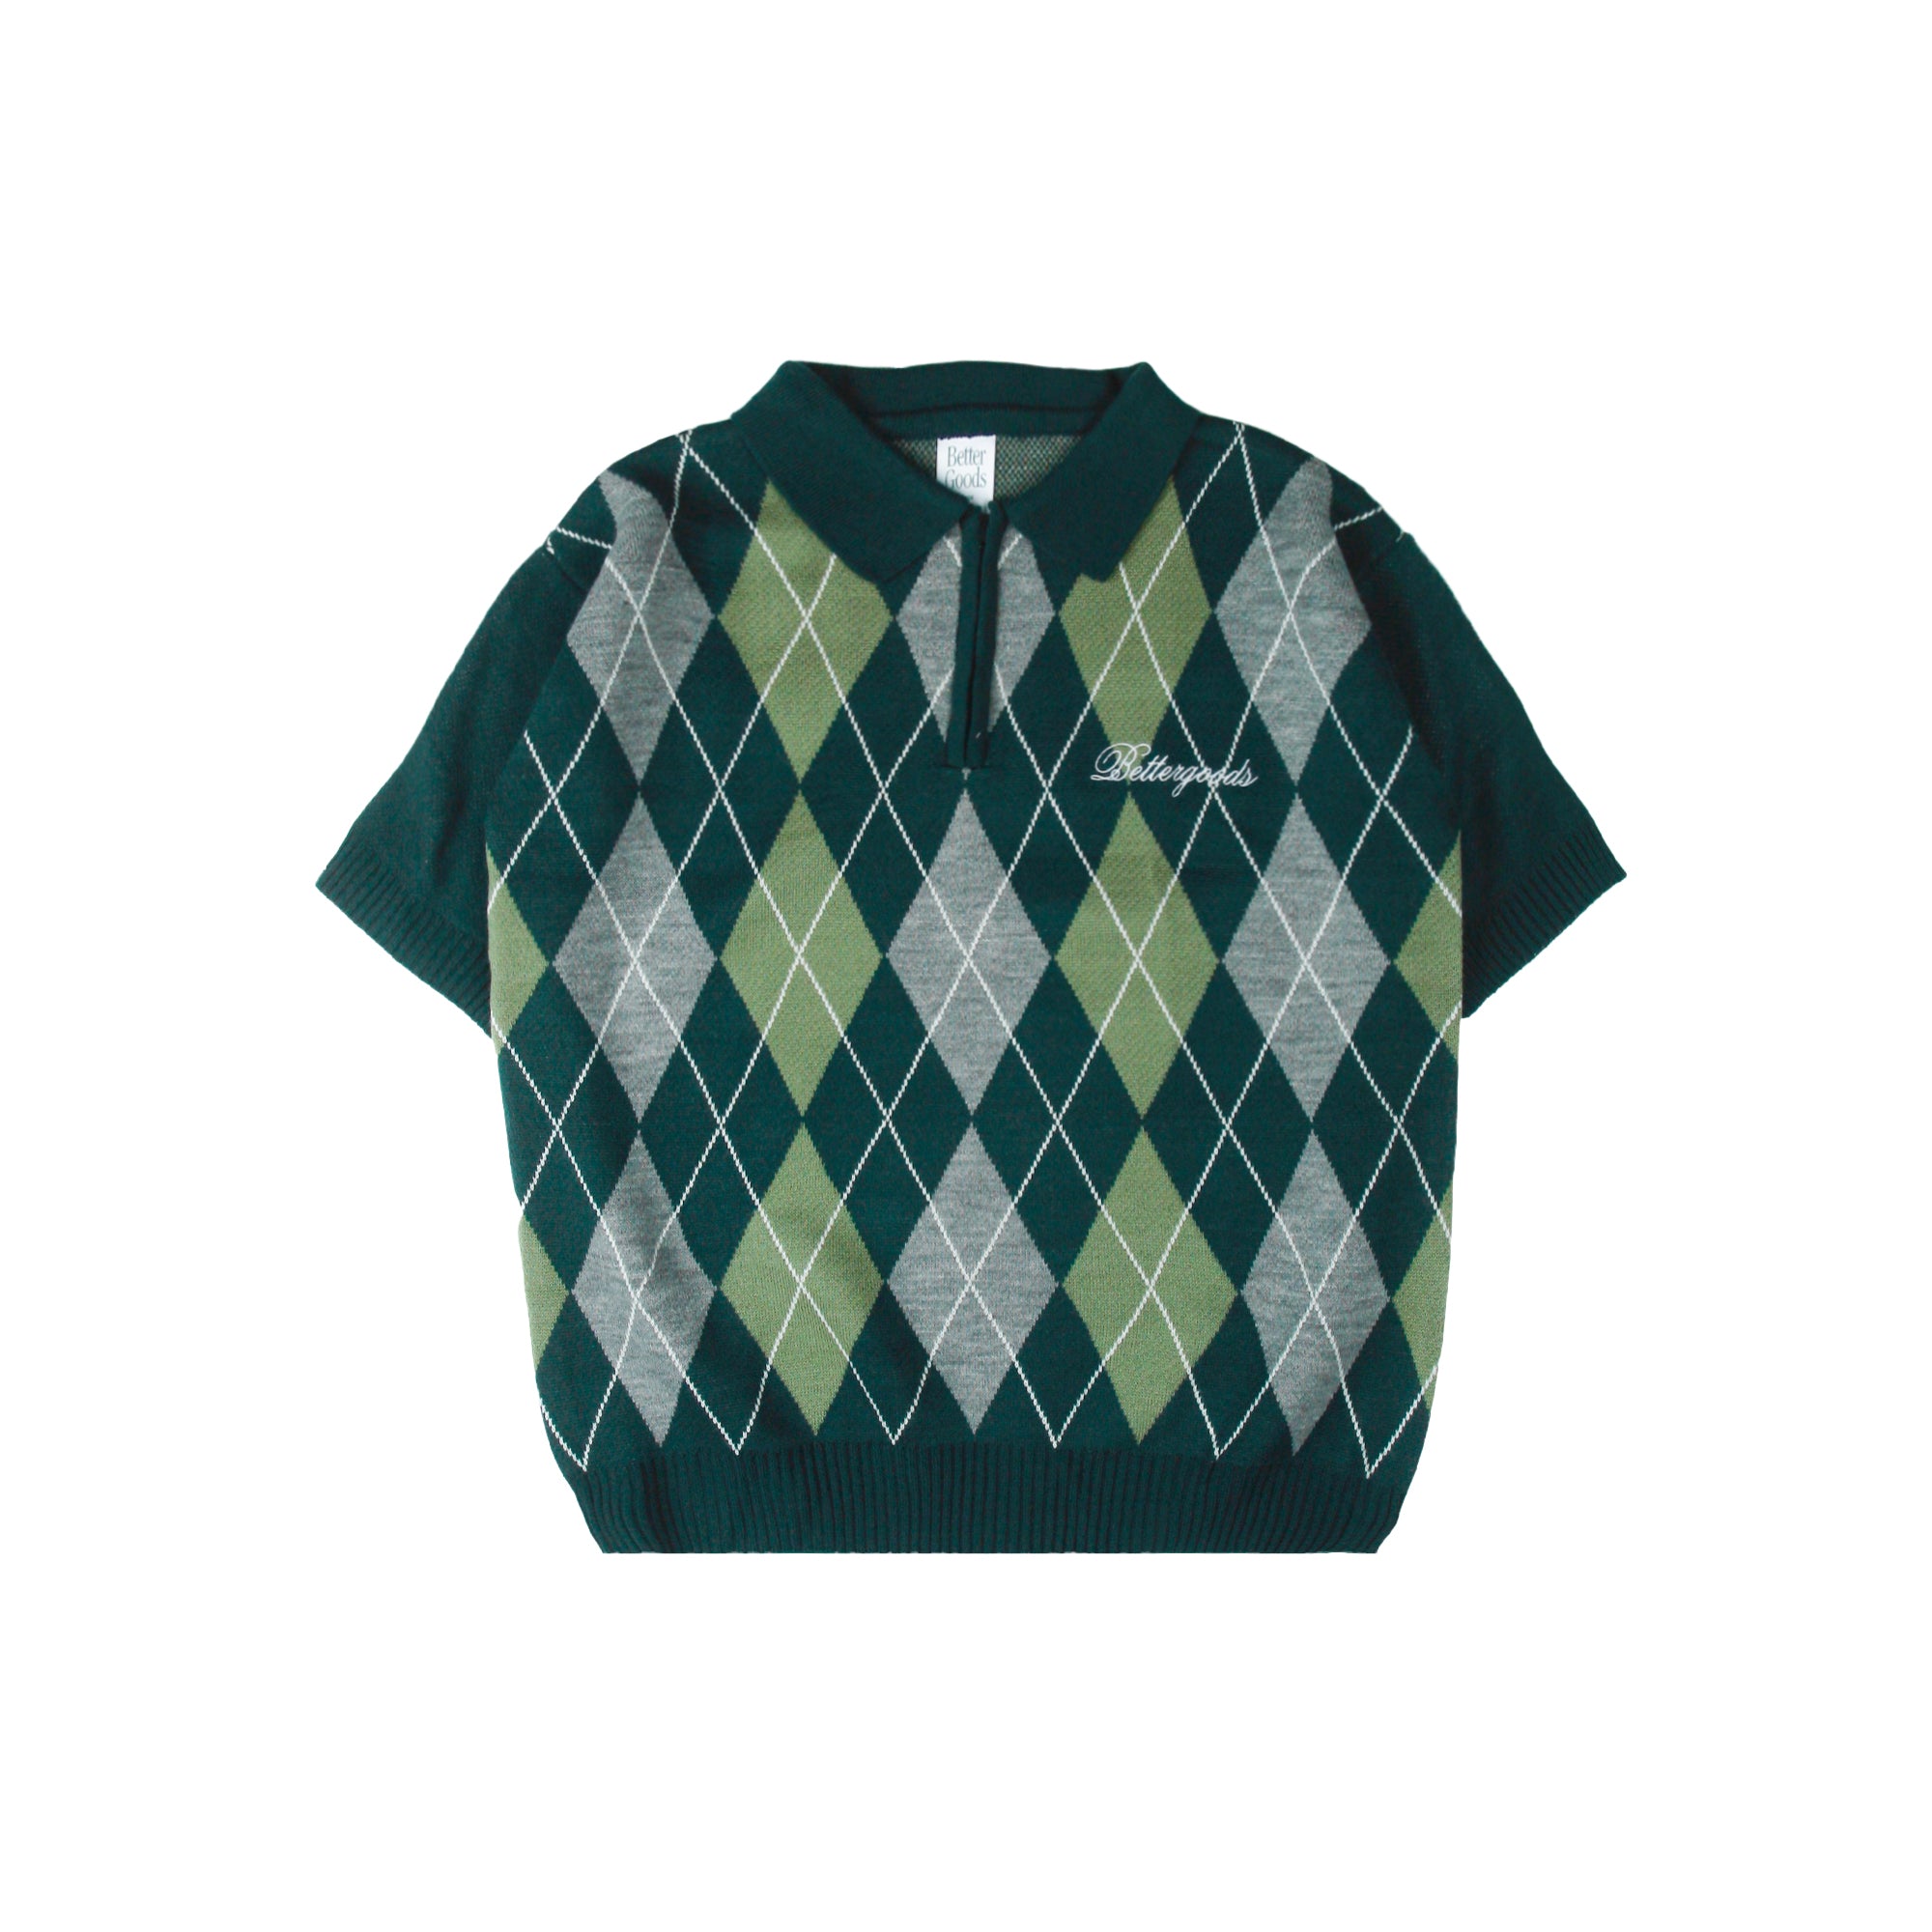 River Island Argyle Texture Knit T-Shirt